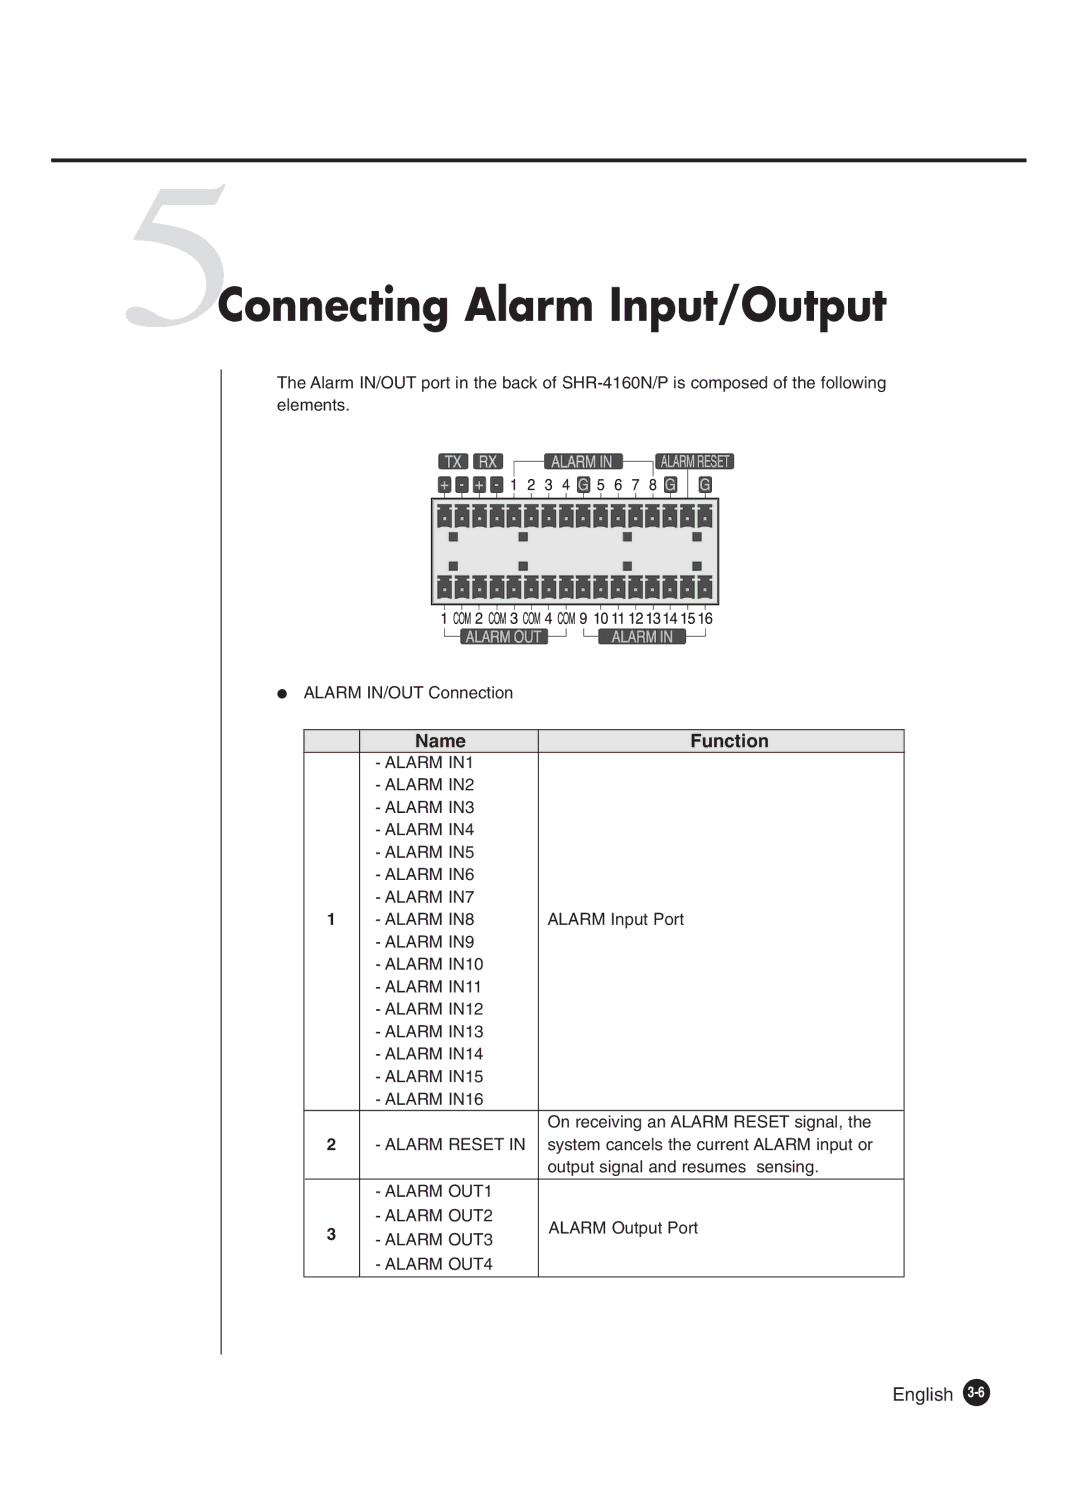 Samsung SHR-4160P manual 5Connecting Alarm Input/Output, English 